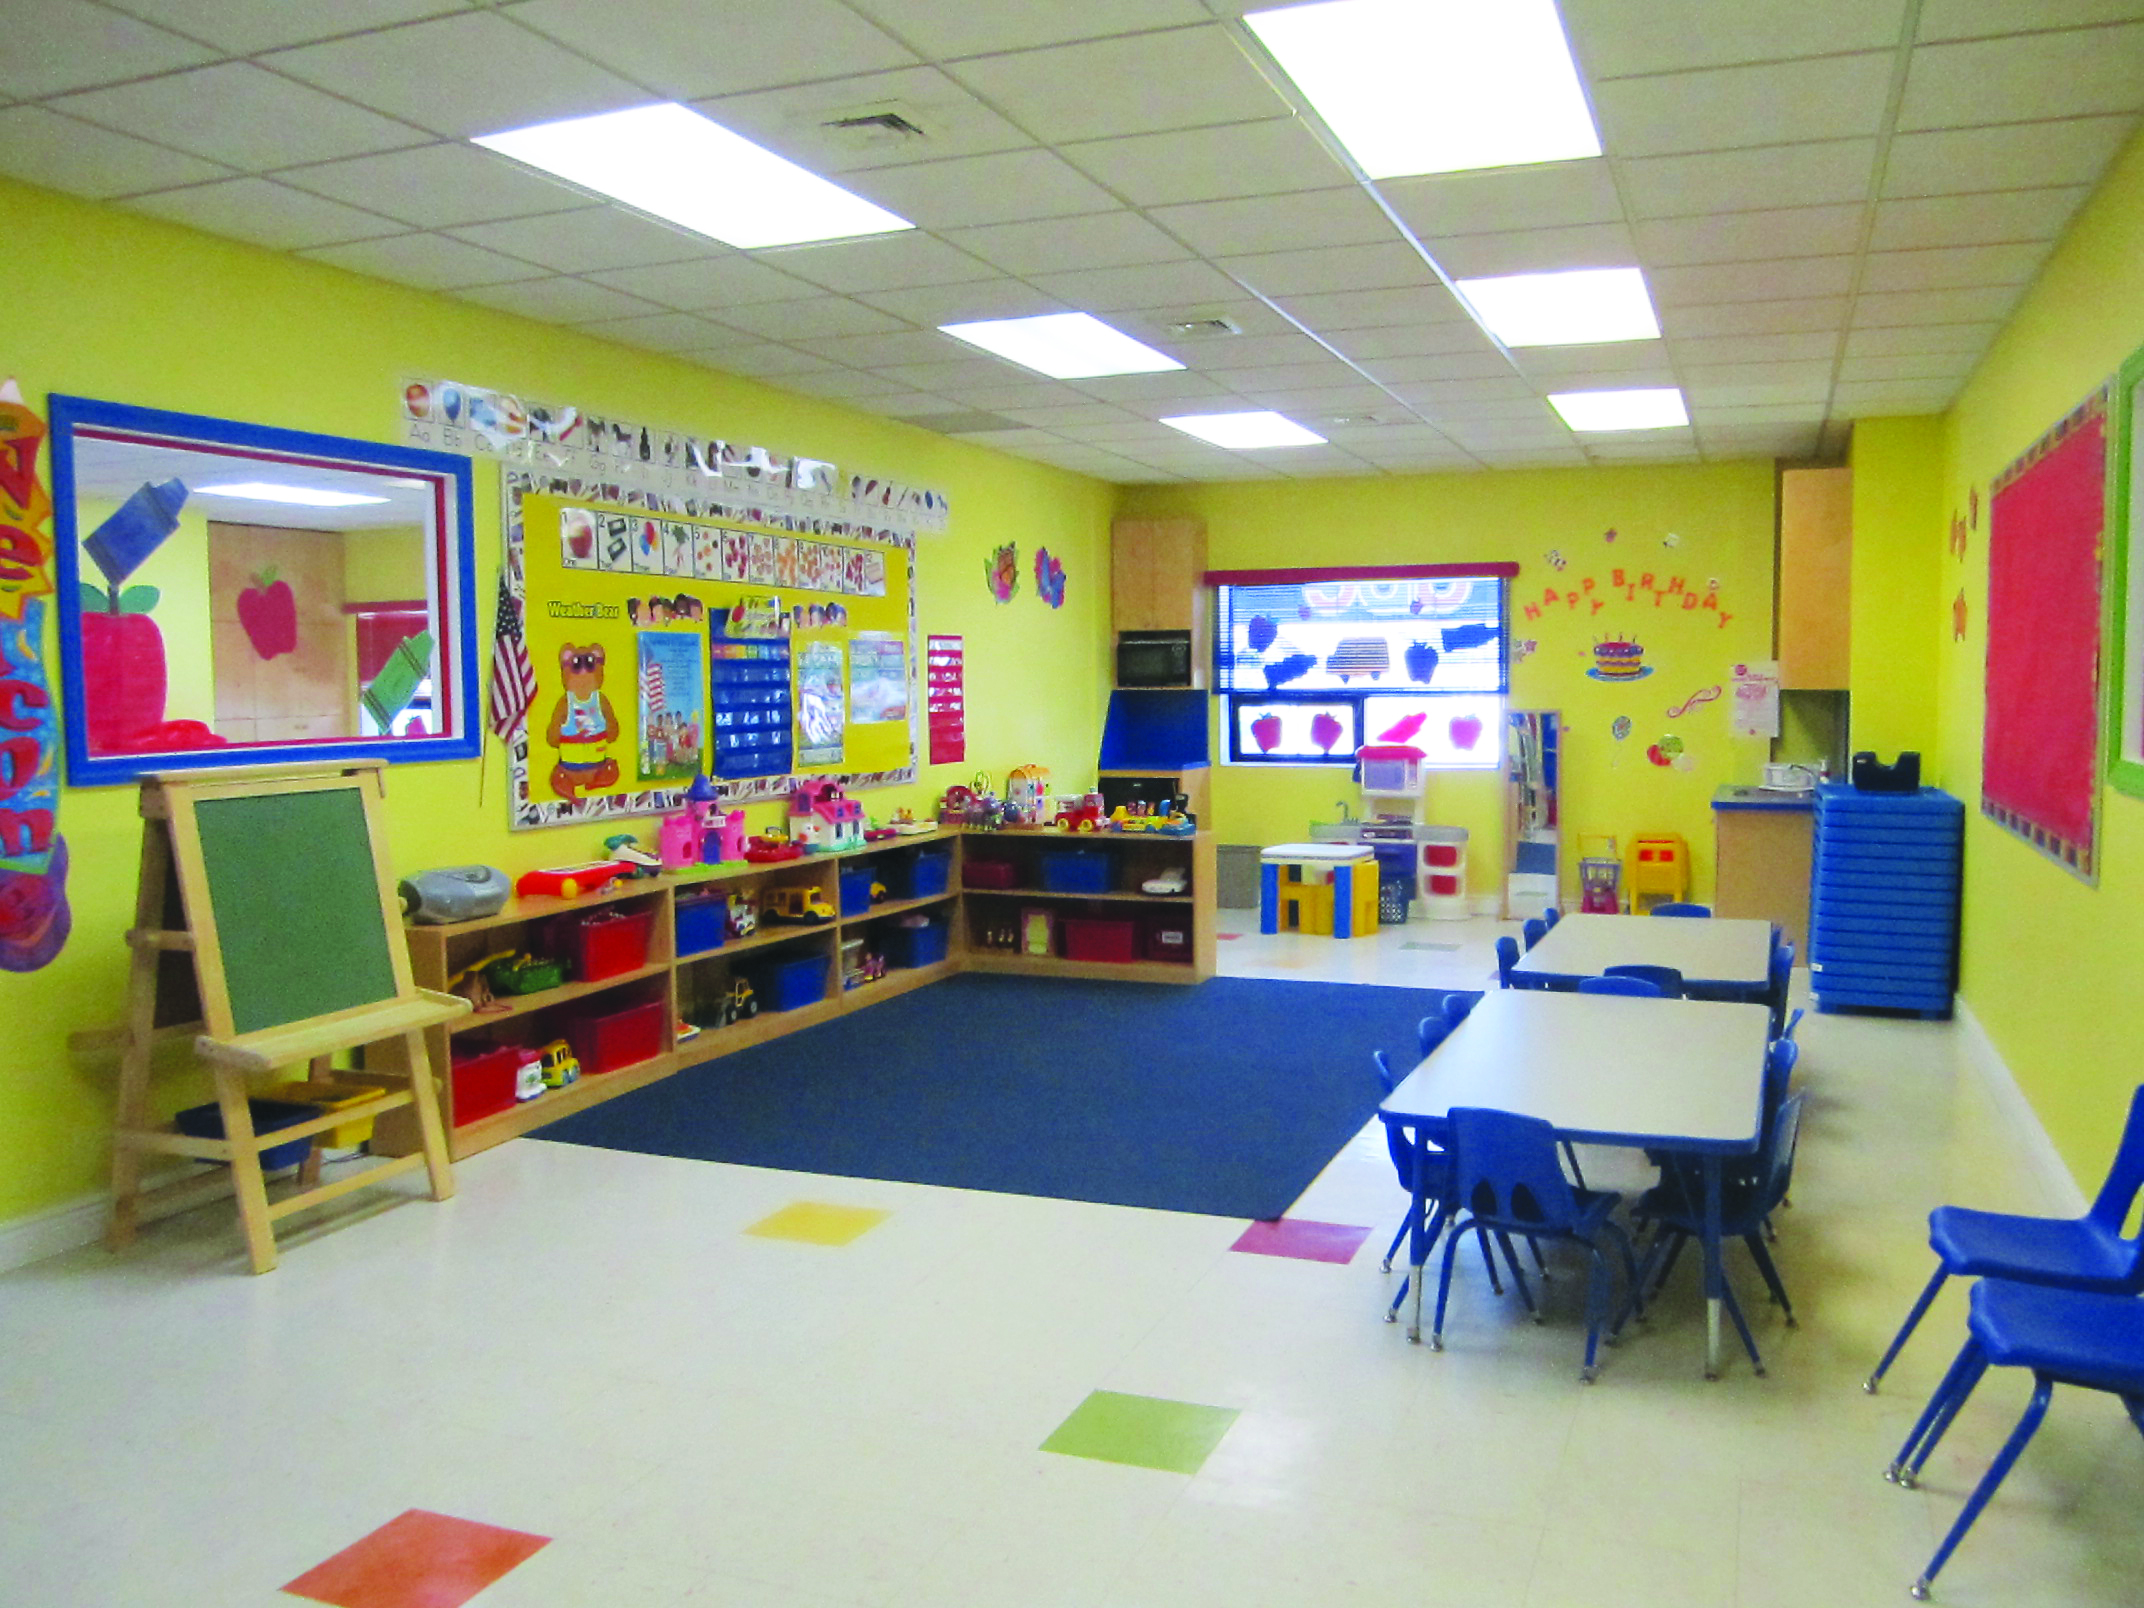 Sunshine Daycare Center’s curriculum will emphasize ...